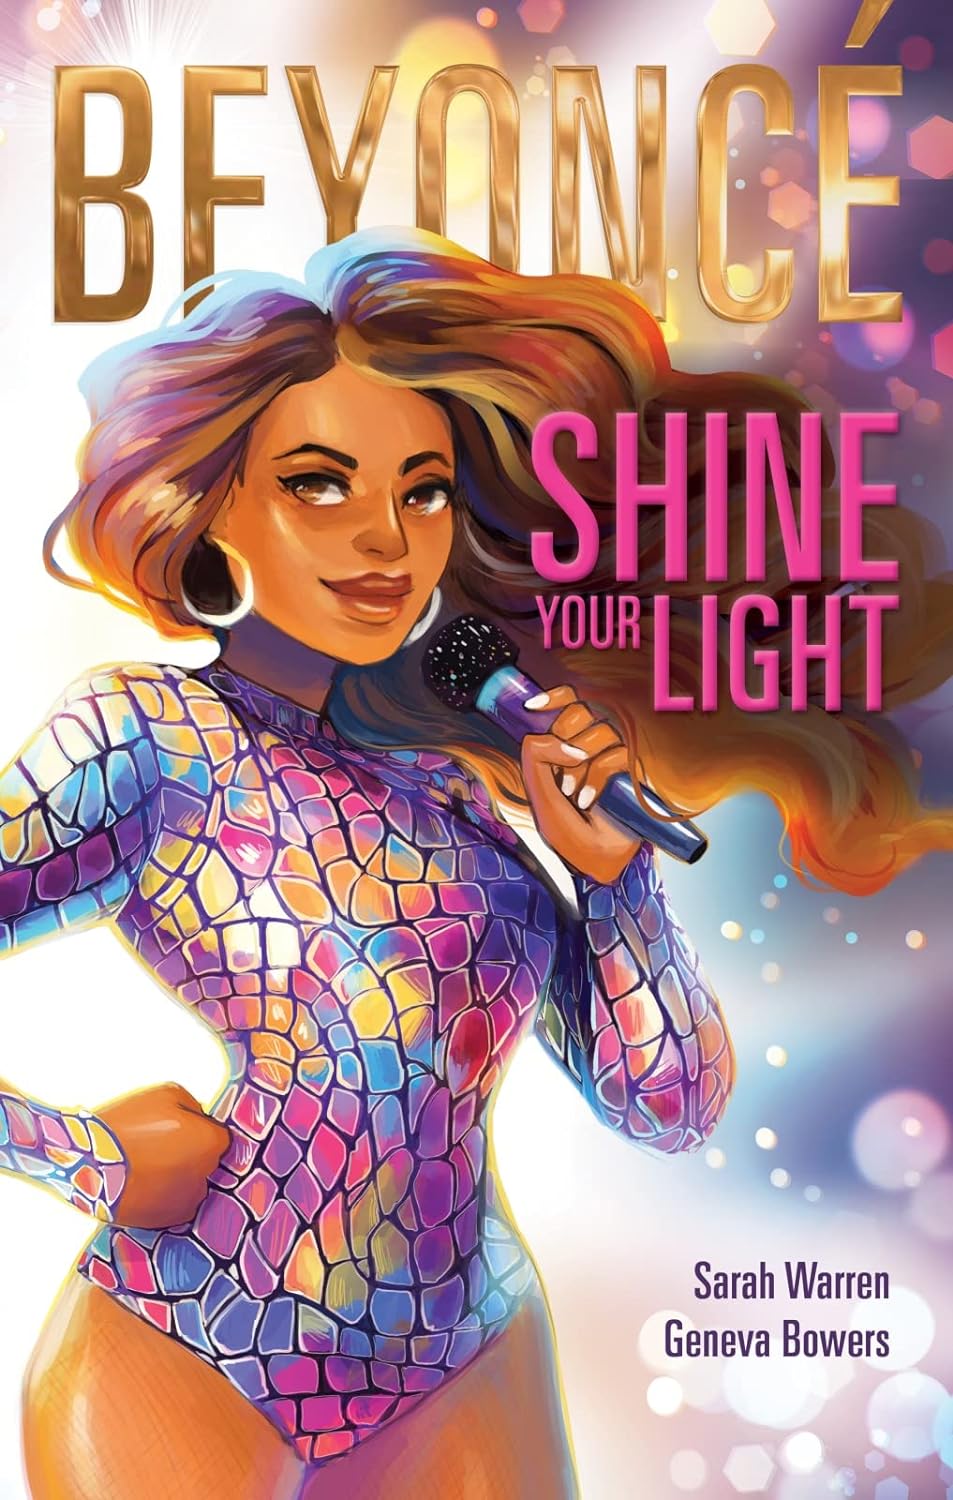 Book - Beyoncé: Shine Your Light